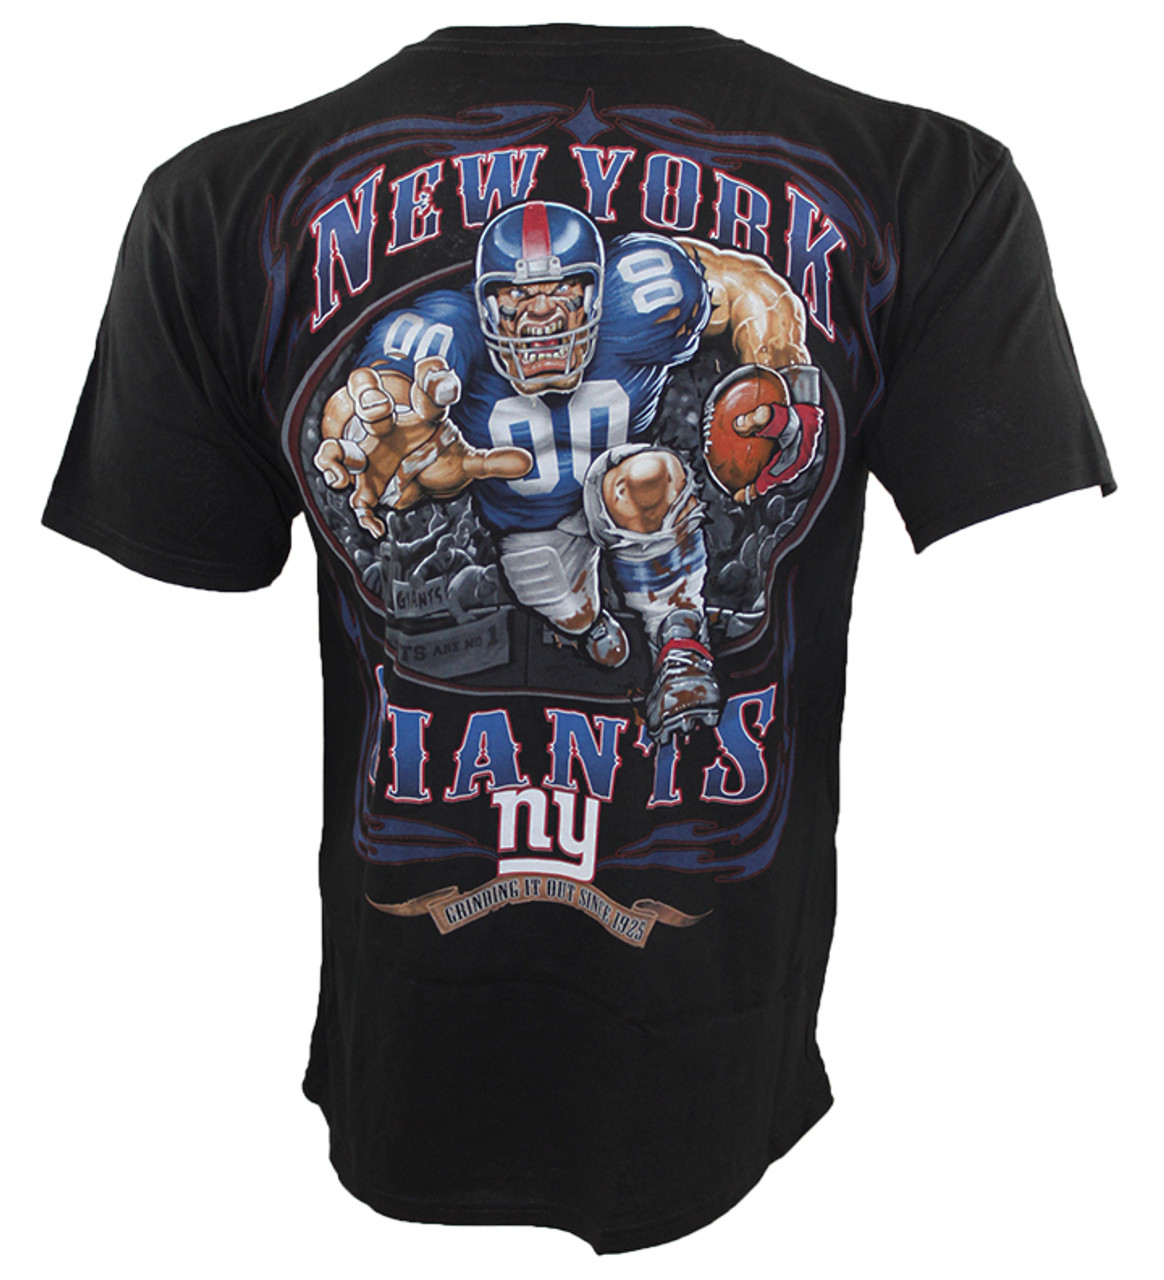 NFL NY Giants Running Back Shirt